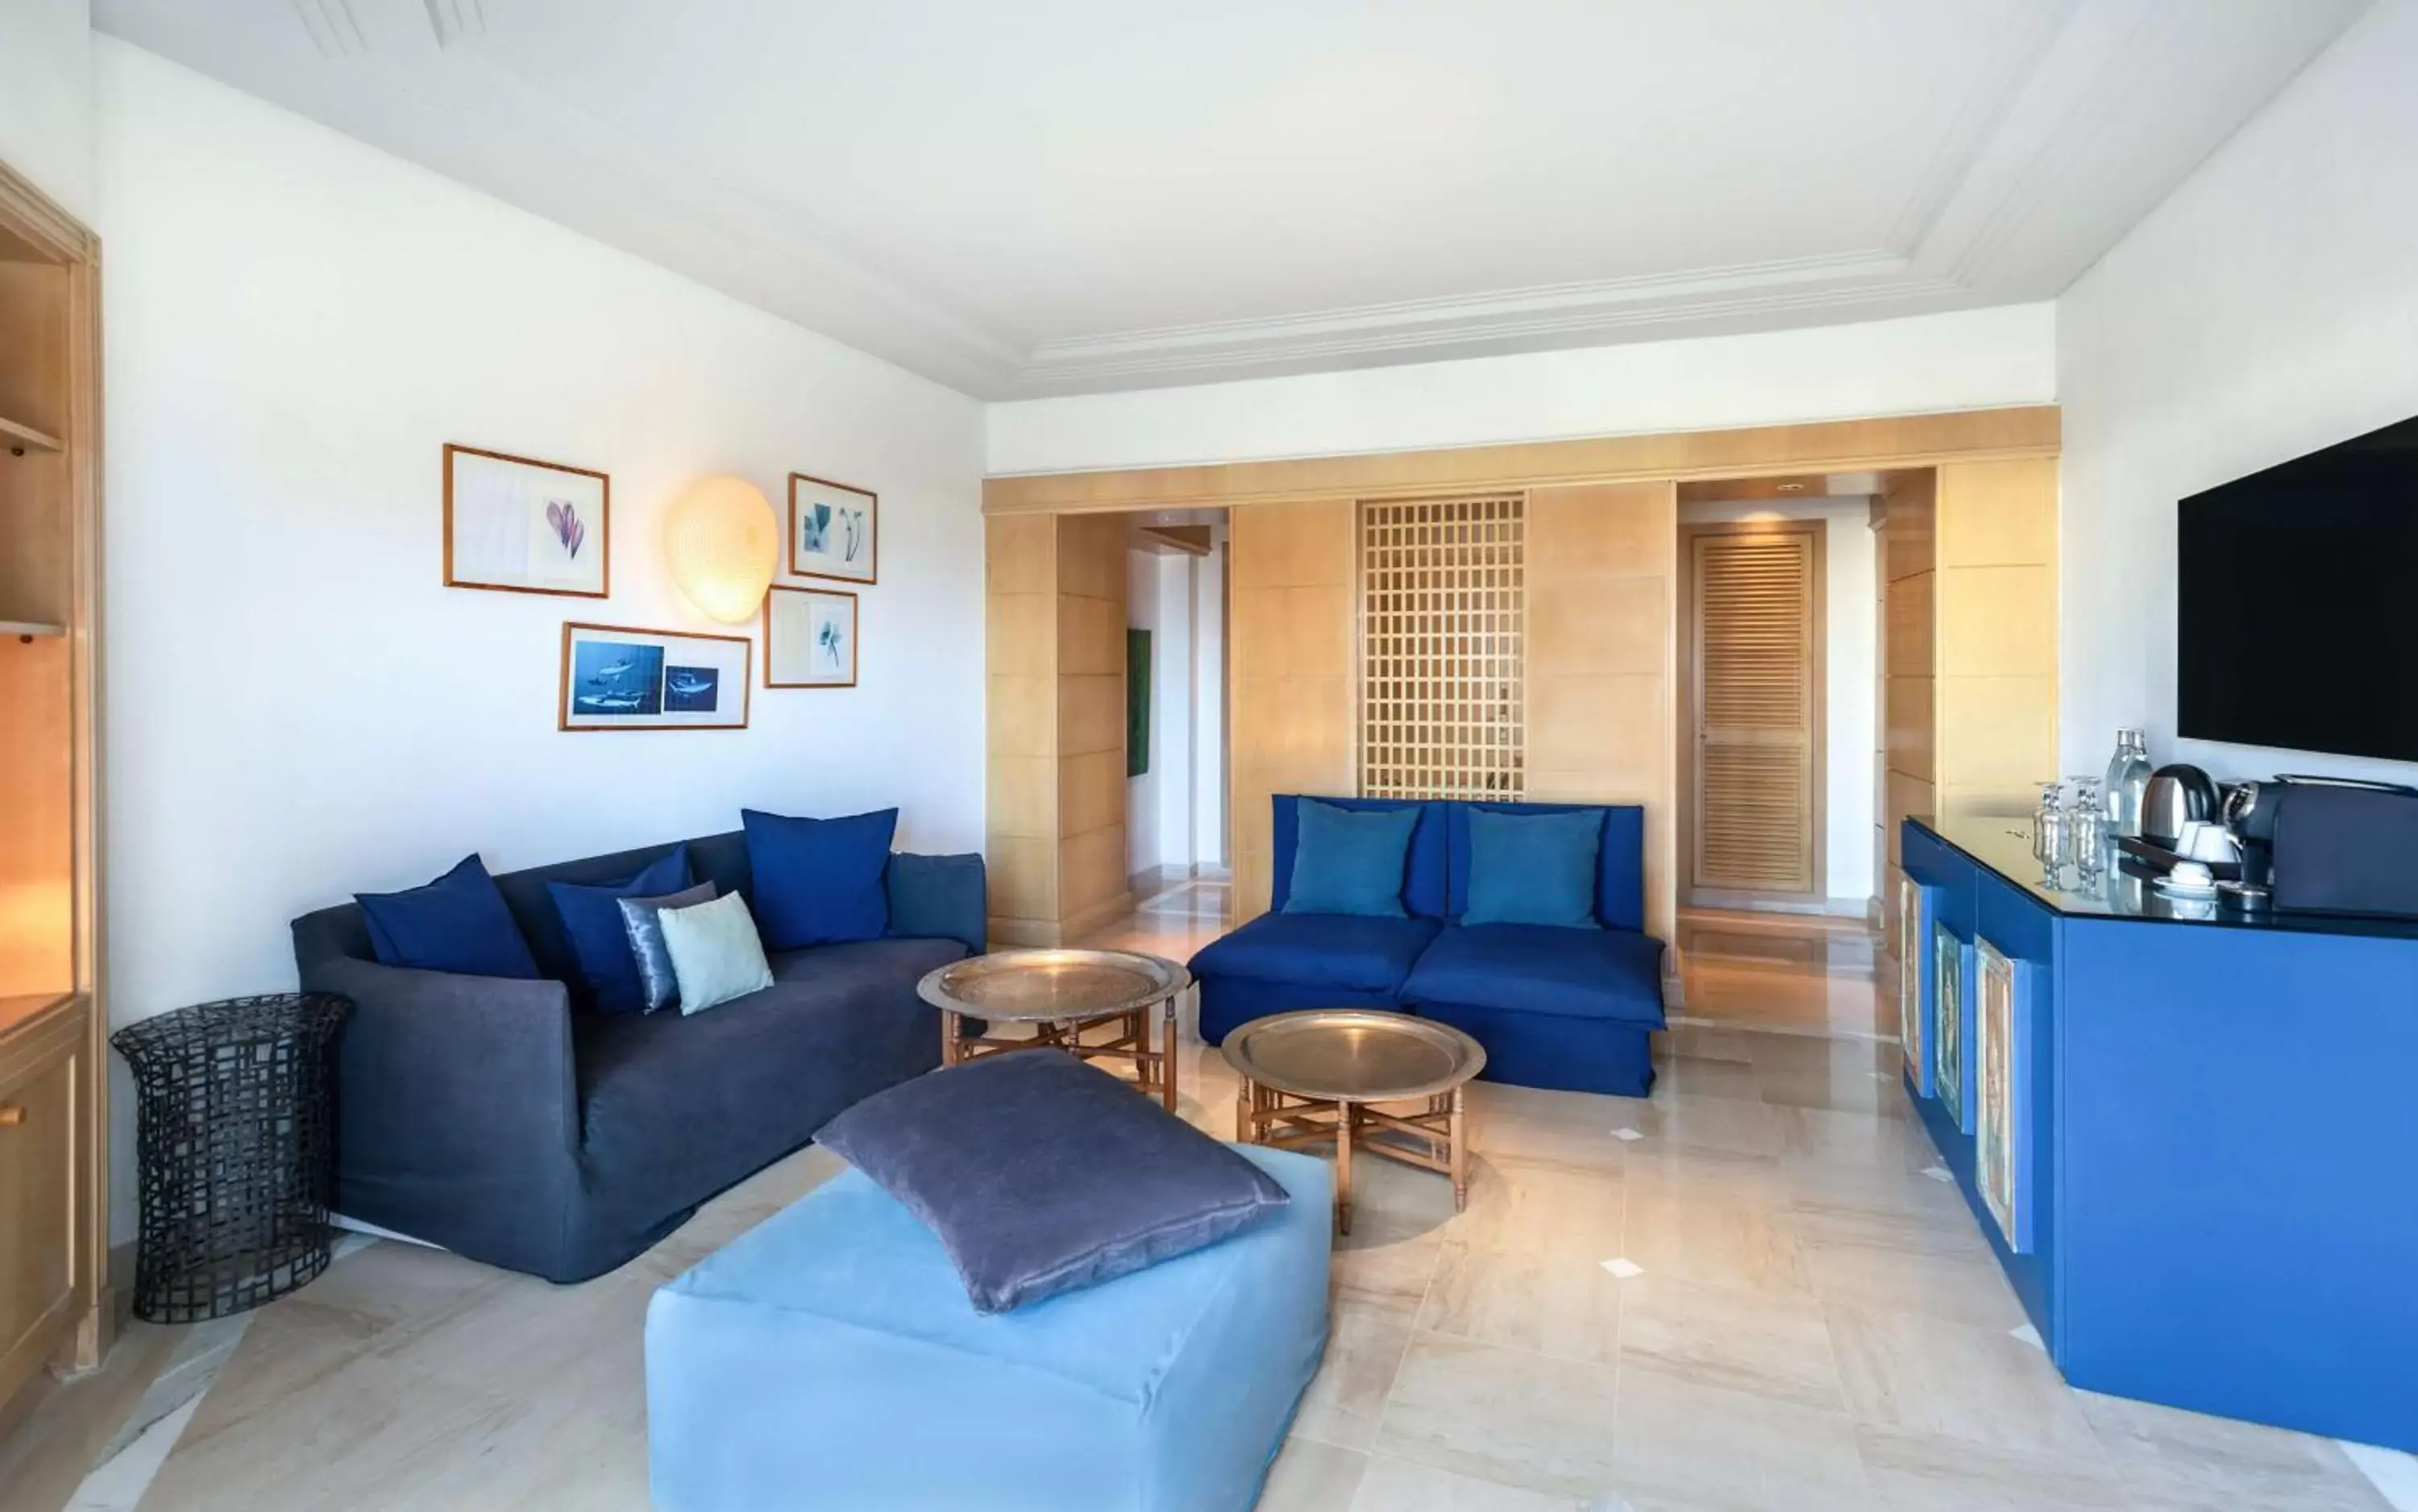 Photo of the whole room, Seating Area in Radisson Blu Palace Resort & Thalasso, Djerba